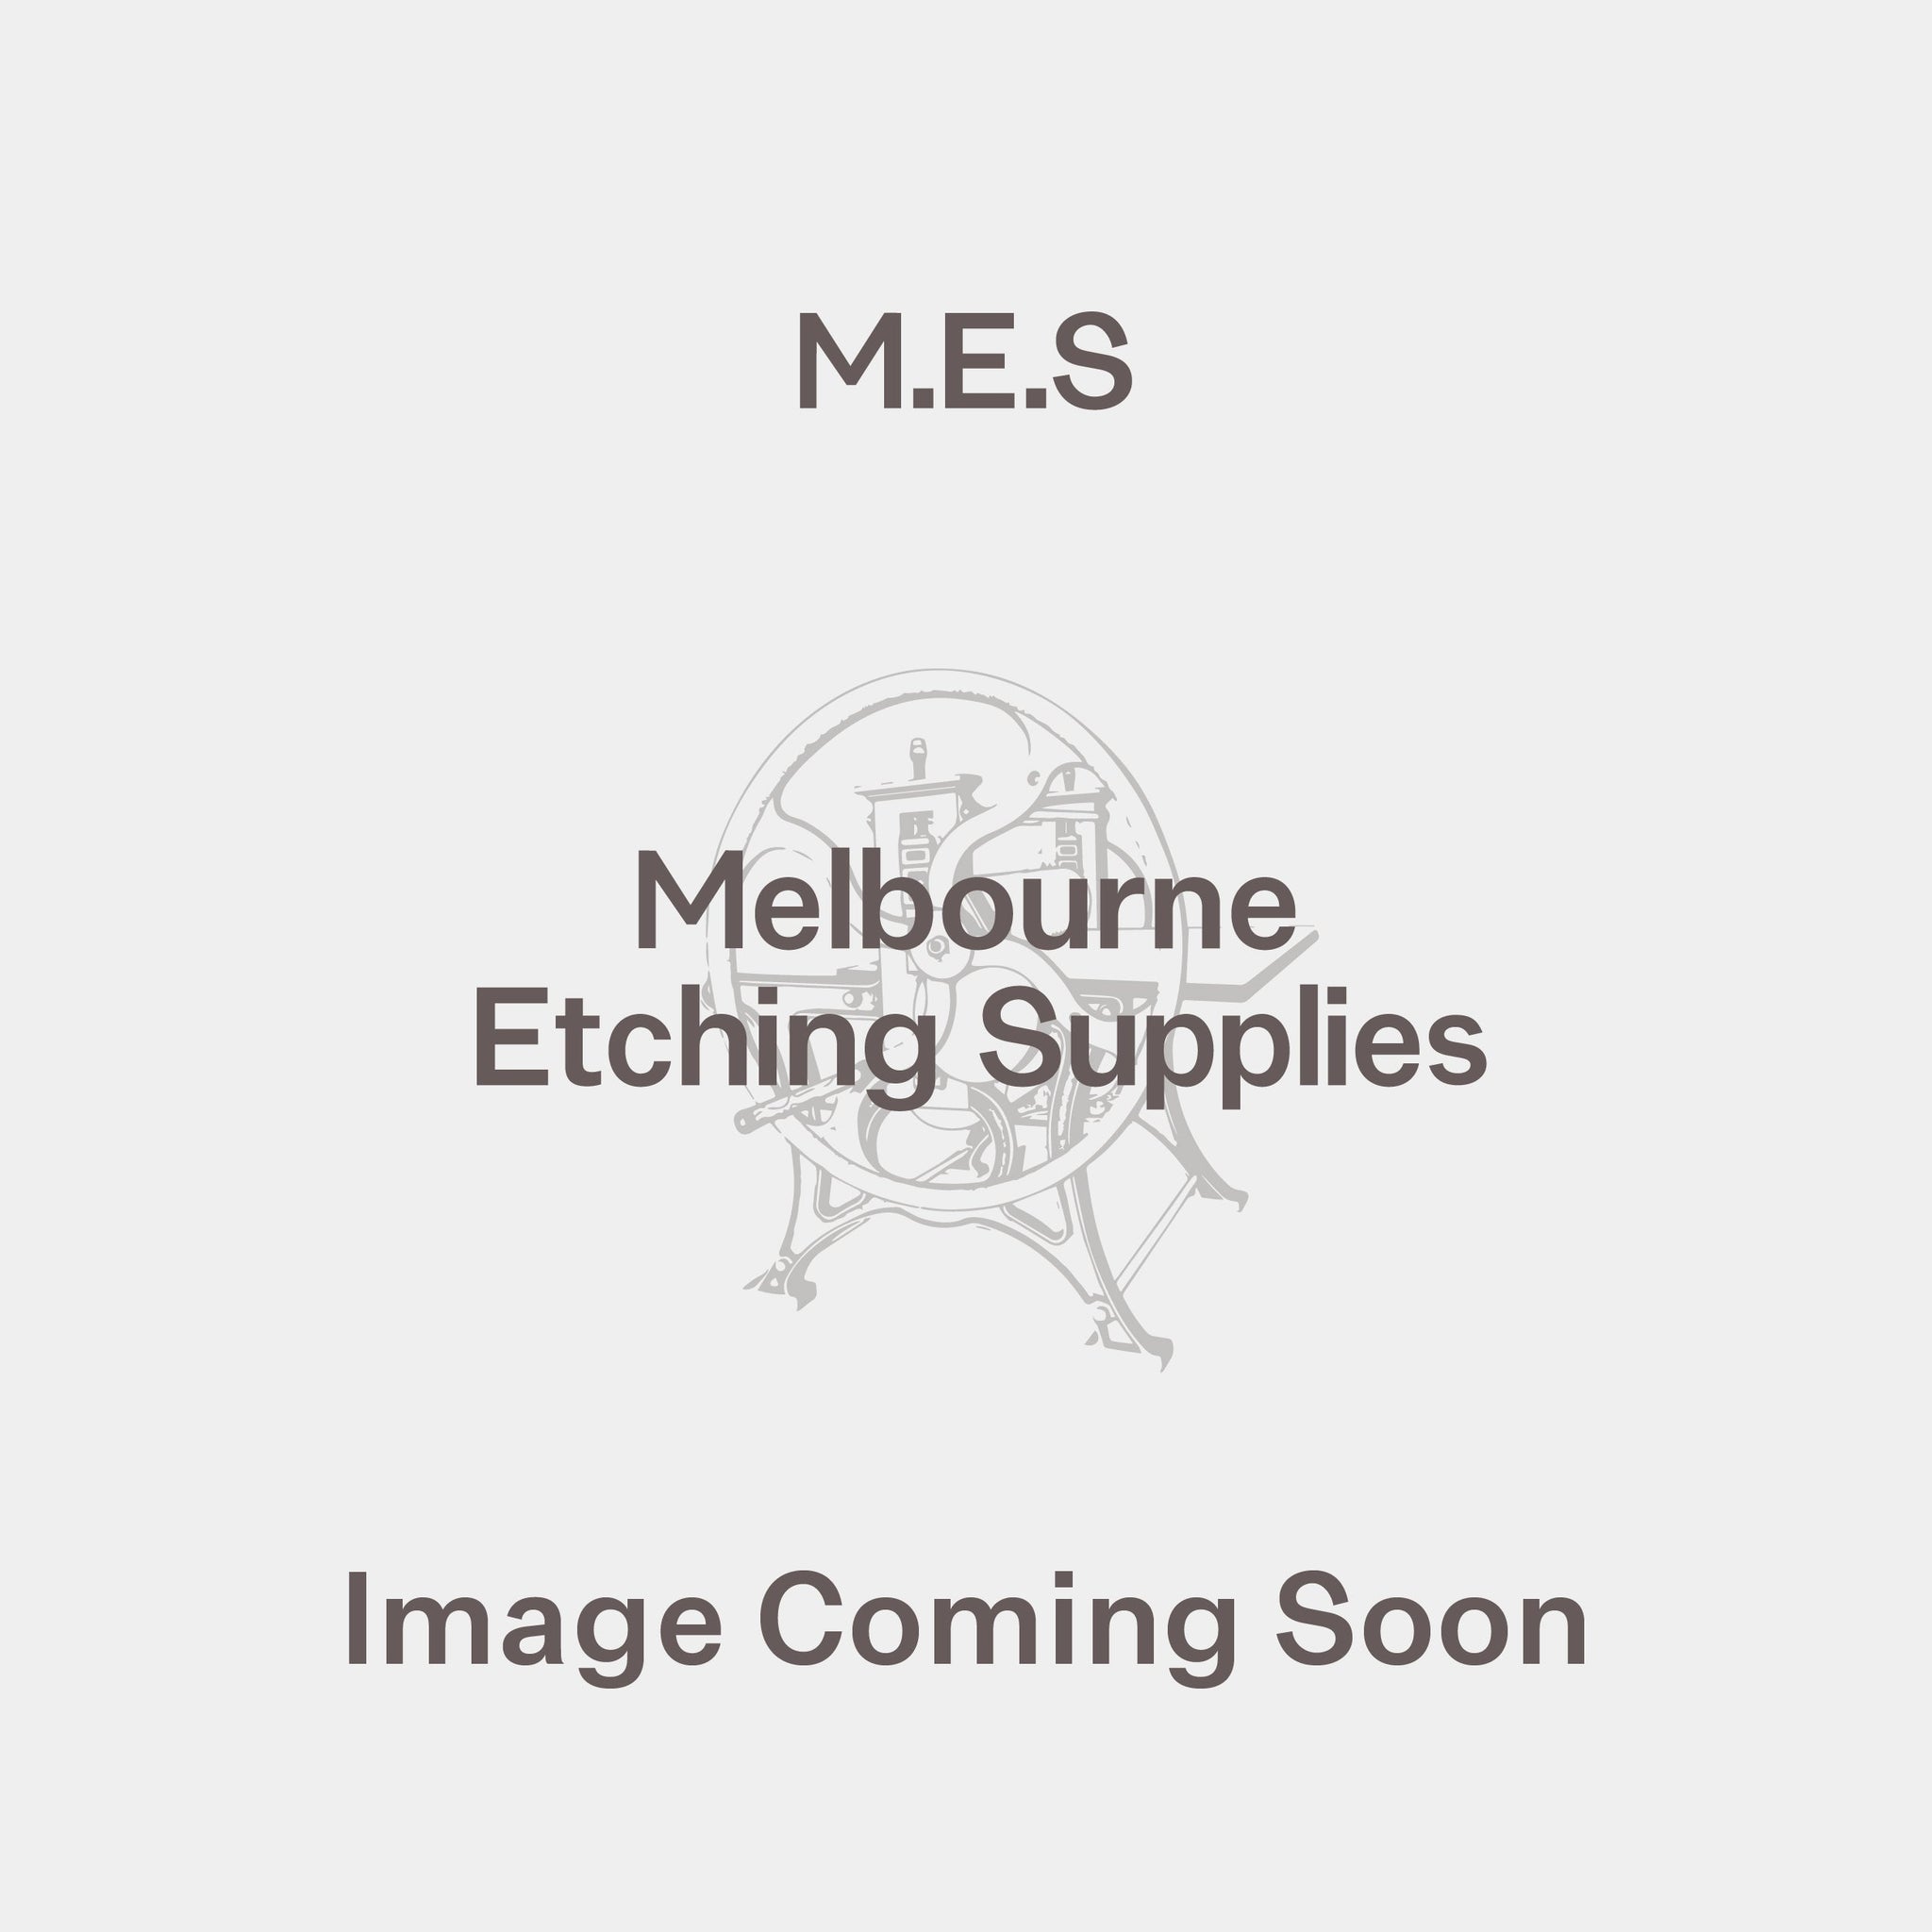 M.E.S Econo Press Stand - Melbourne Etching Supplies